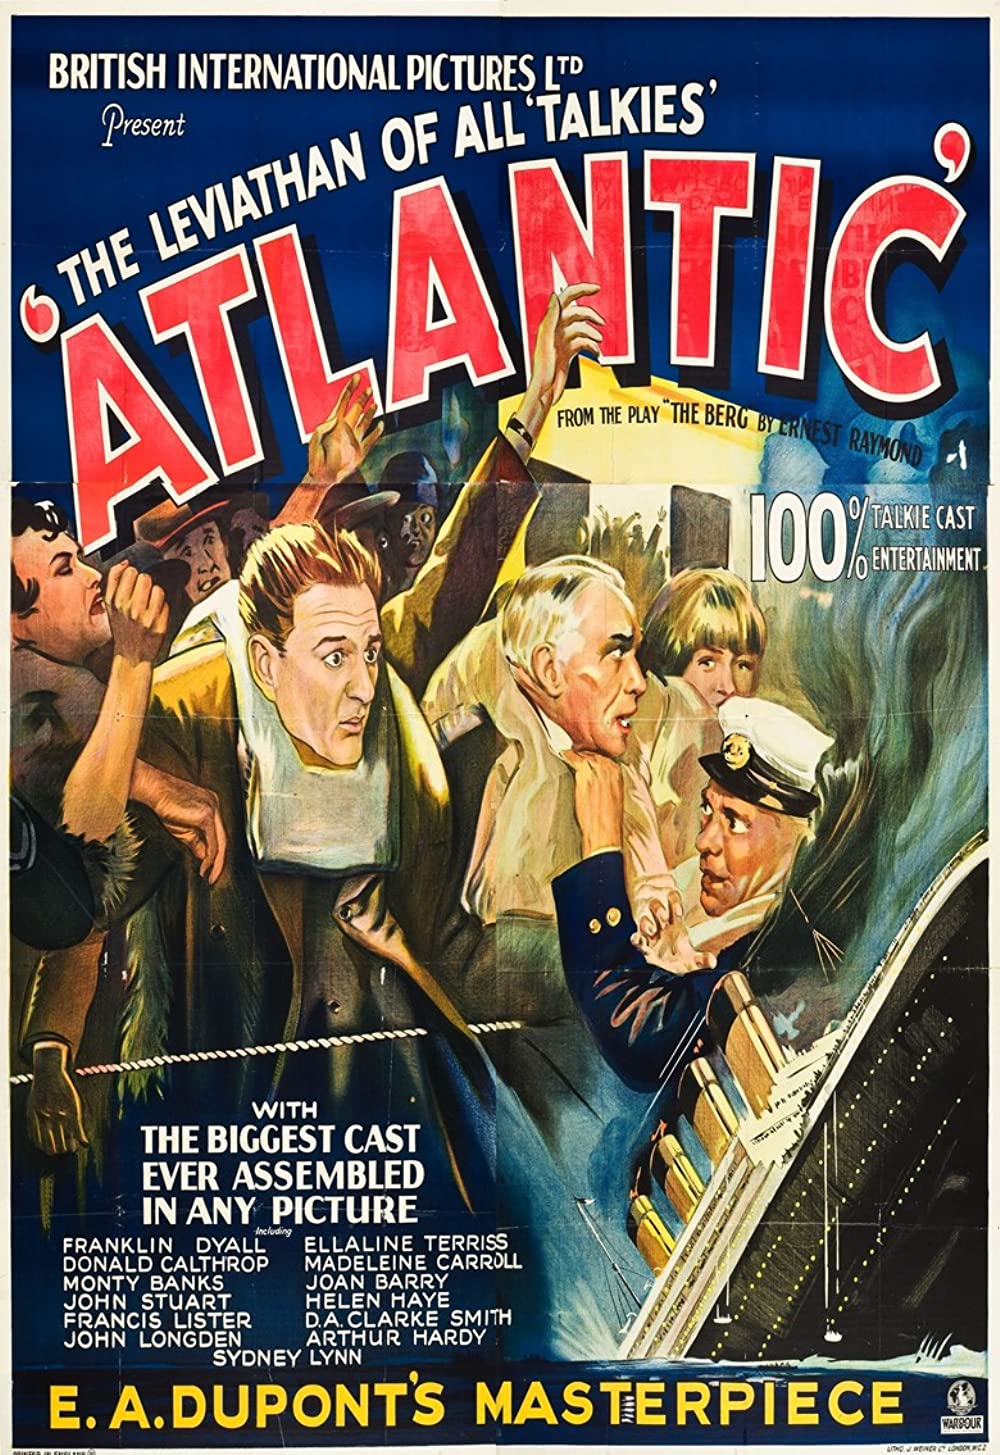 Filmbeschreibung zu Atlantik